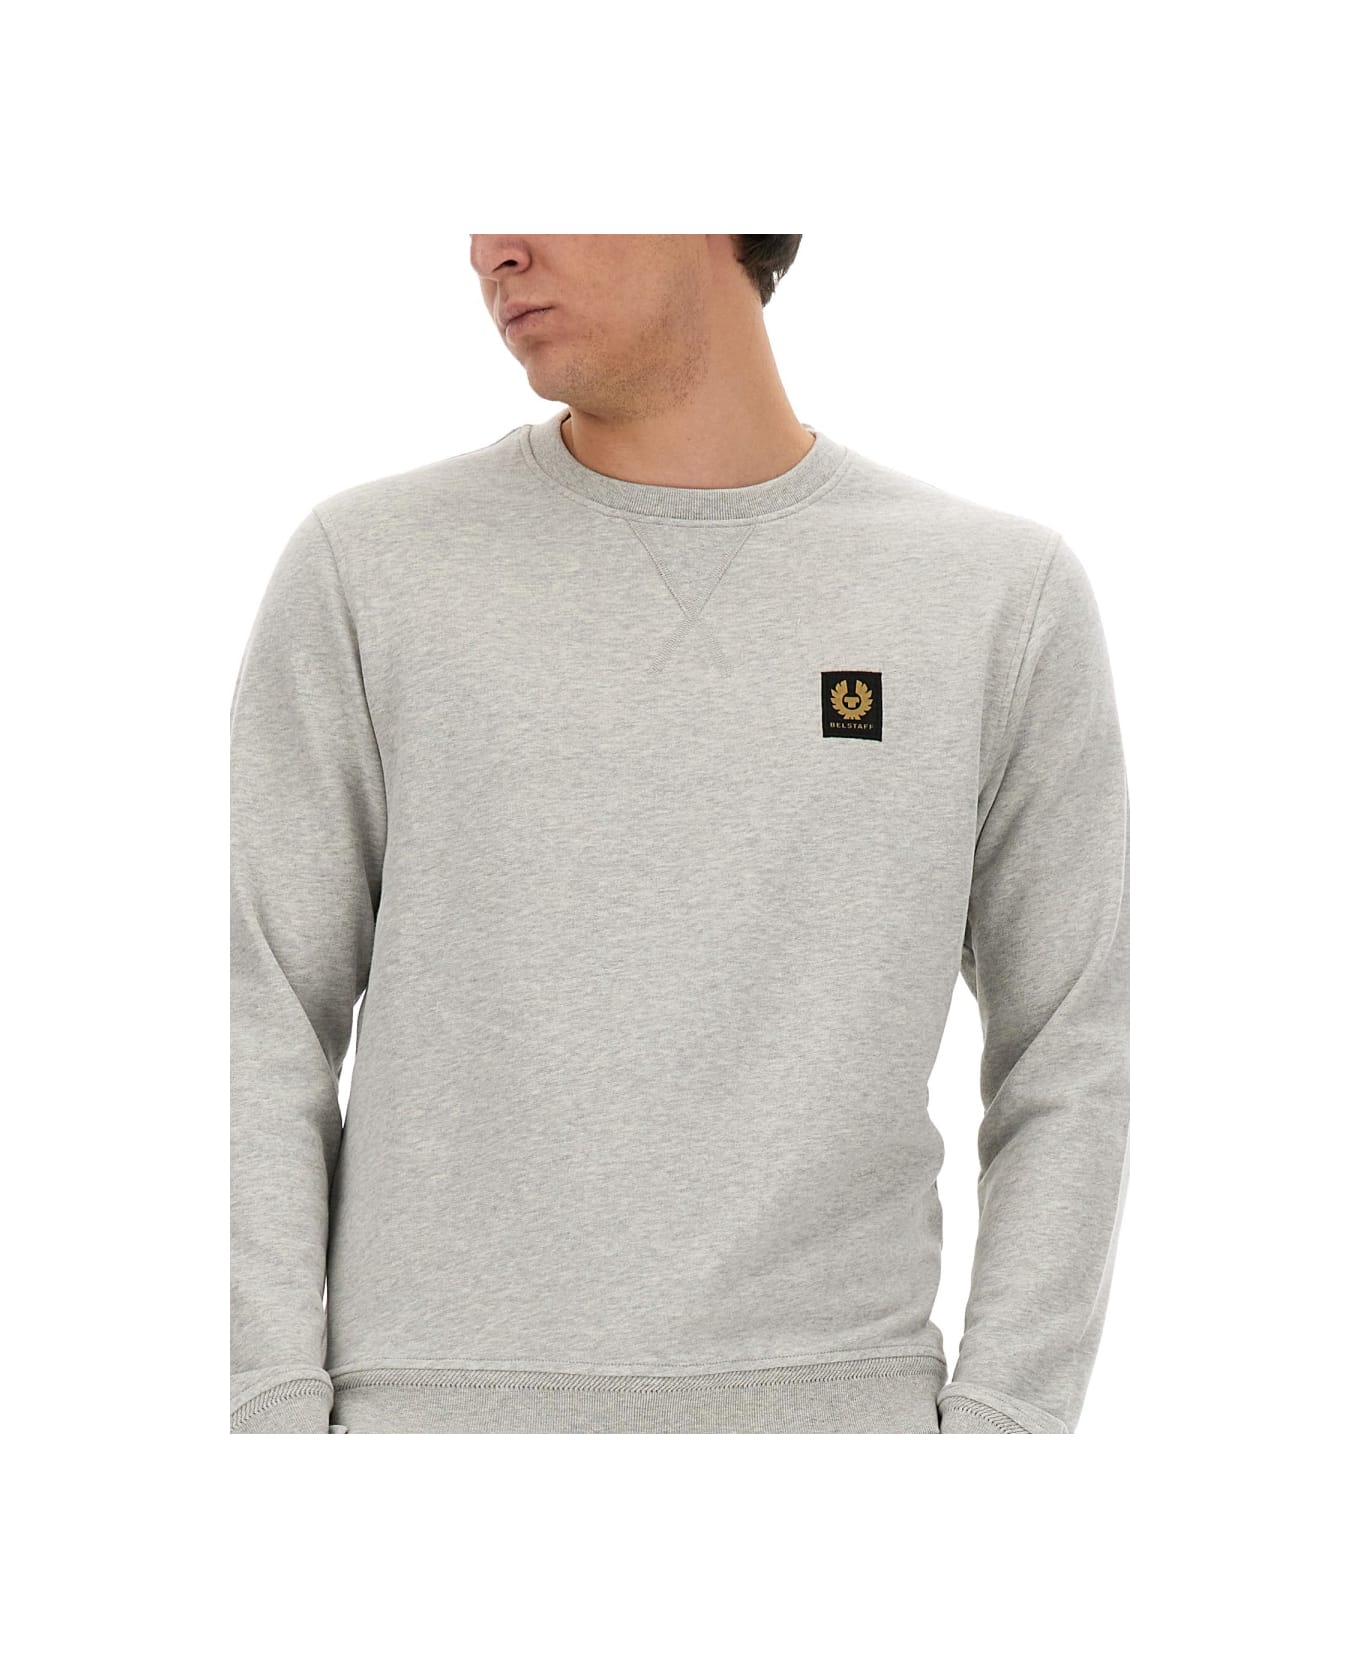 Belstaff Sweatshirt With Logo - GREY